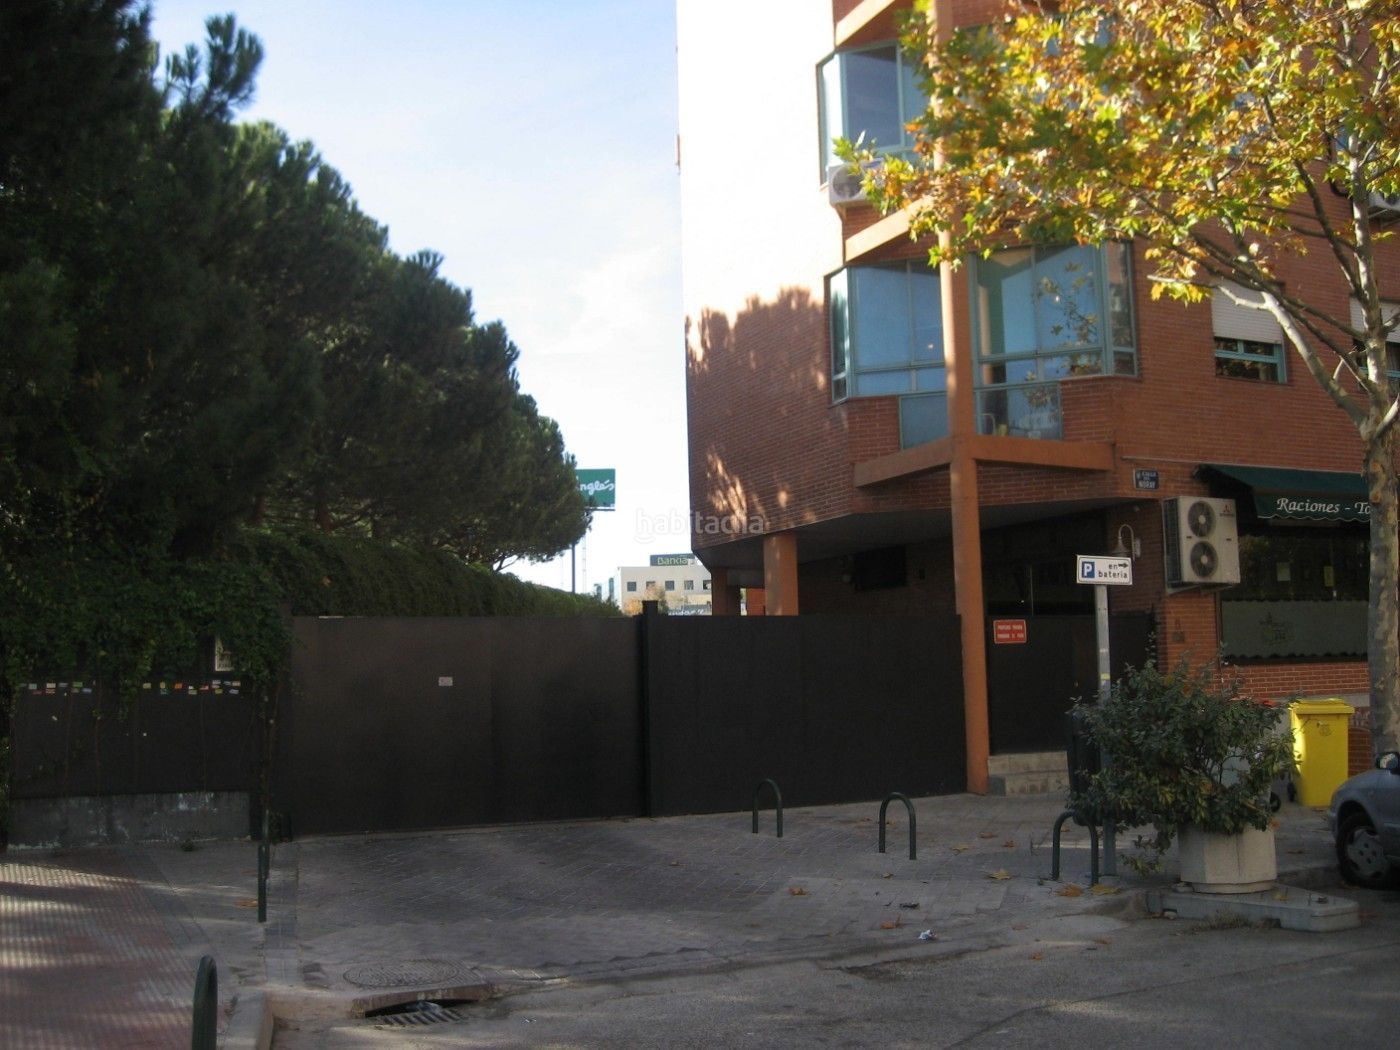 Vendo Plaza De Garaje Parking voiture par 72 € de 12 metros calle noray, 5 vendo plaza garaje  calle noray, alameda de osuna dans Alameda de Osuna Madrid - habitaclia